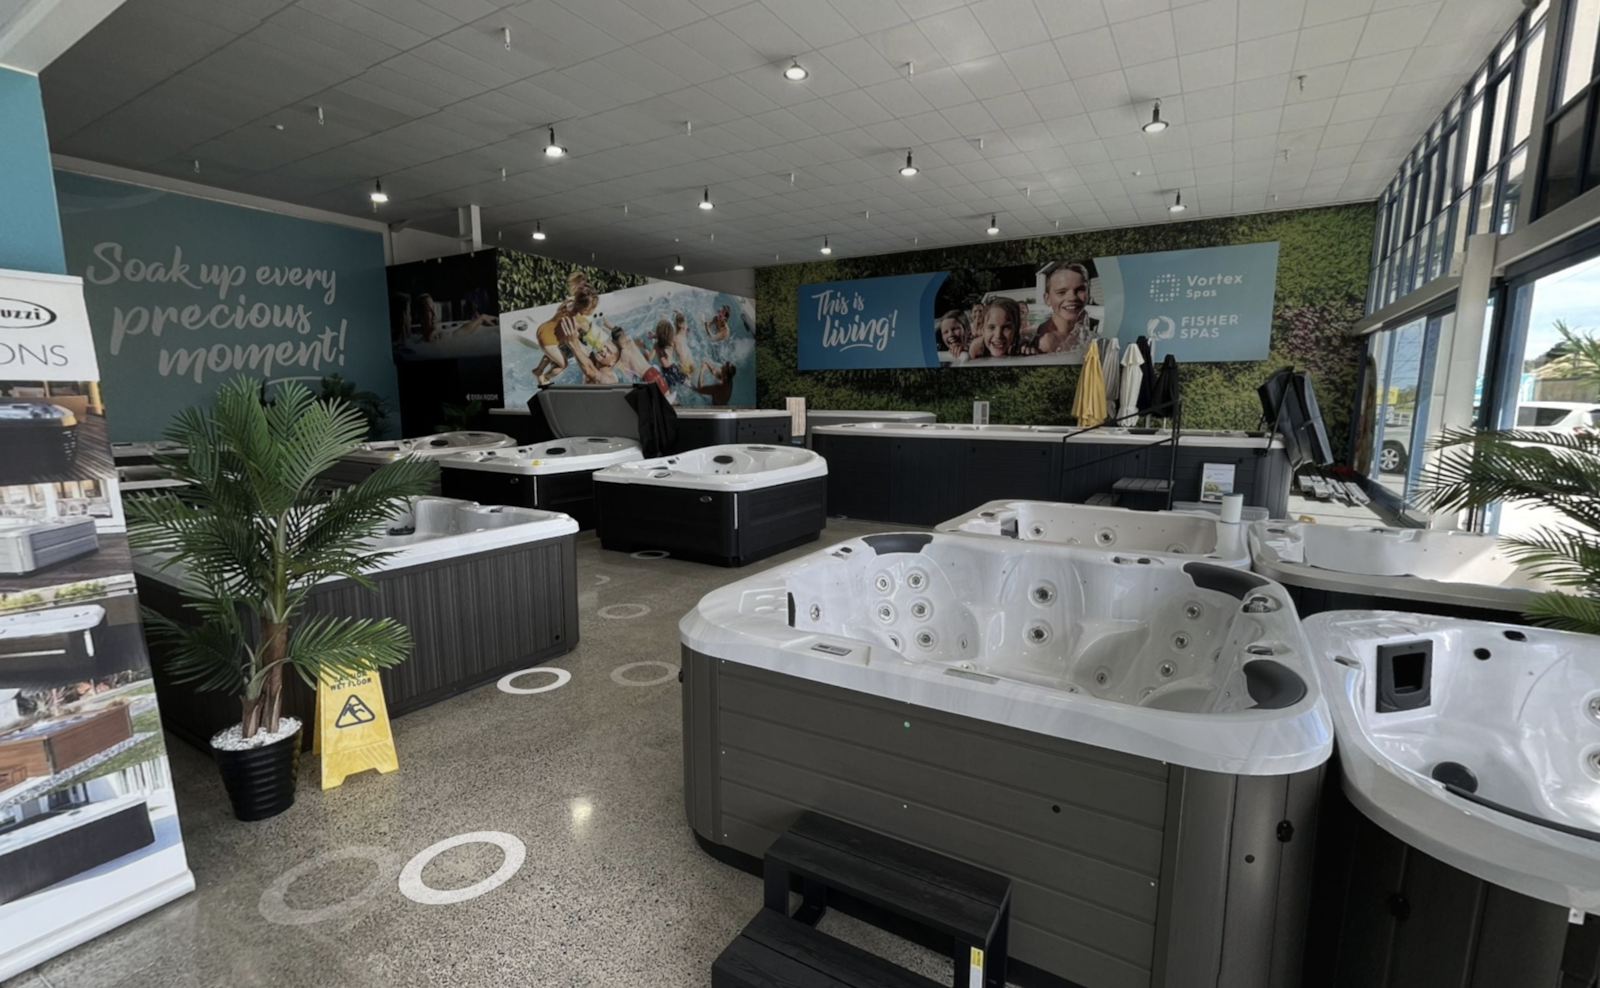 Spa World Auckland showroom